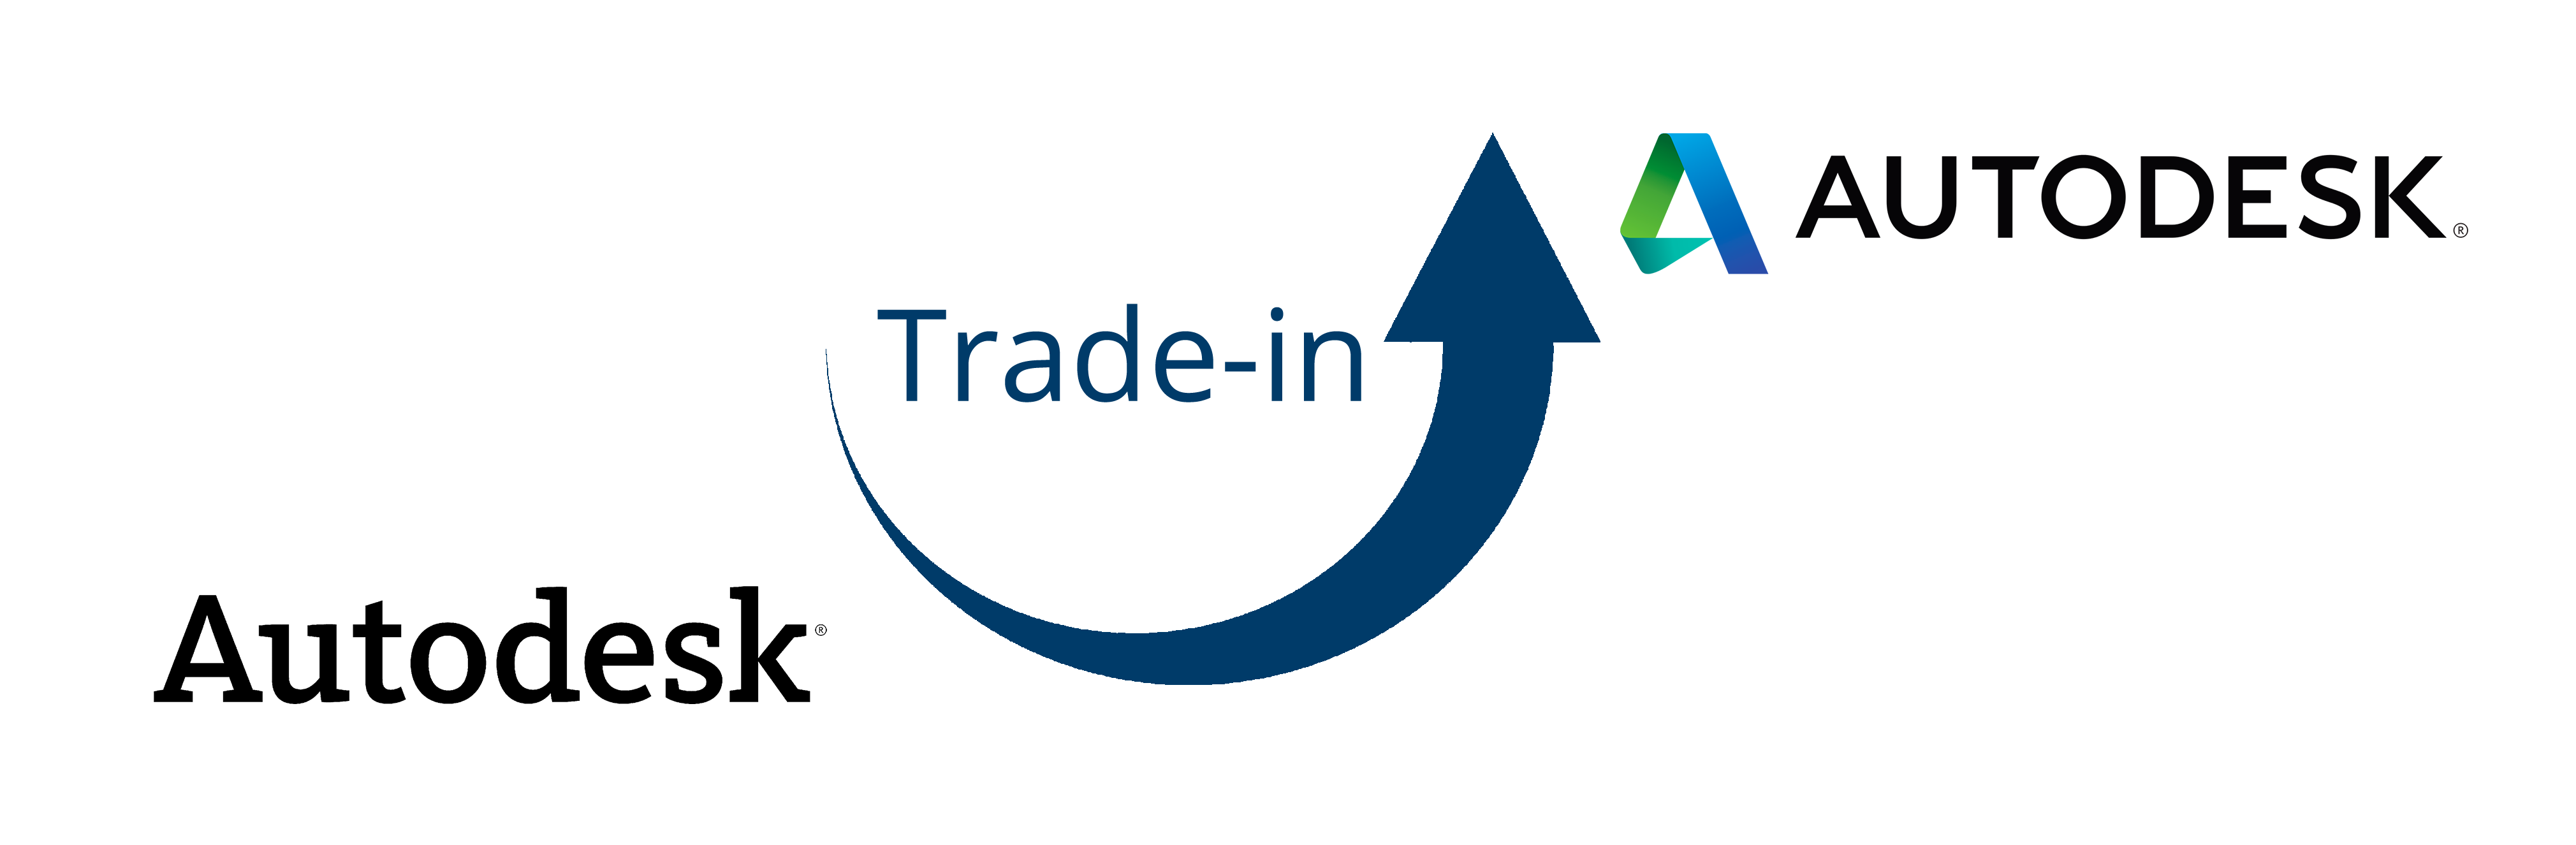 Trade-in Autodesk